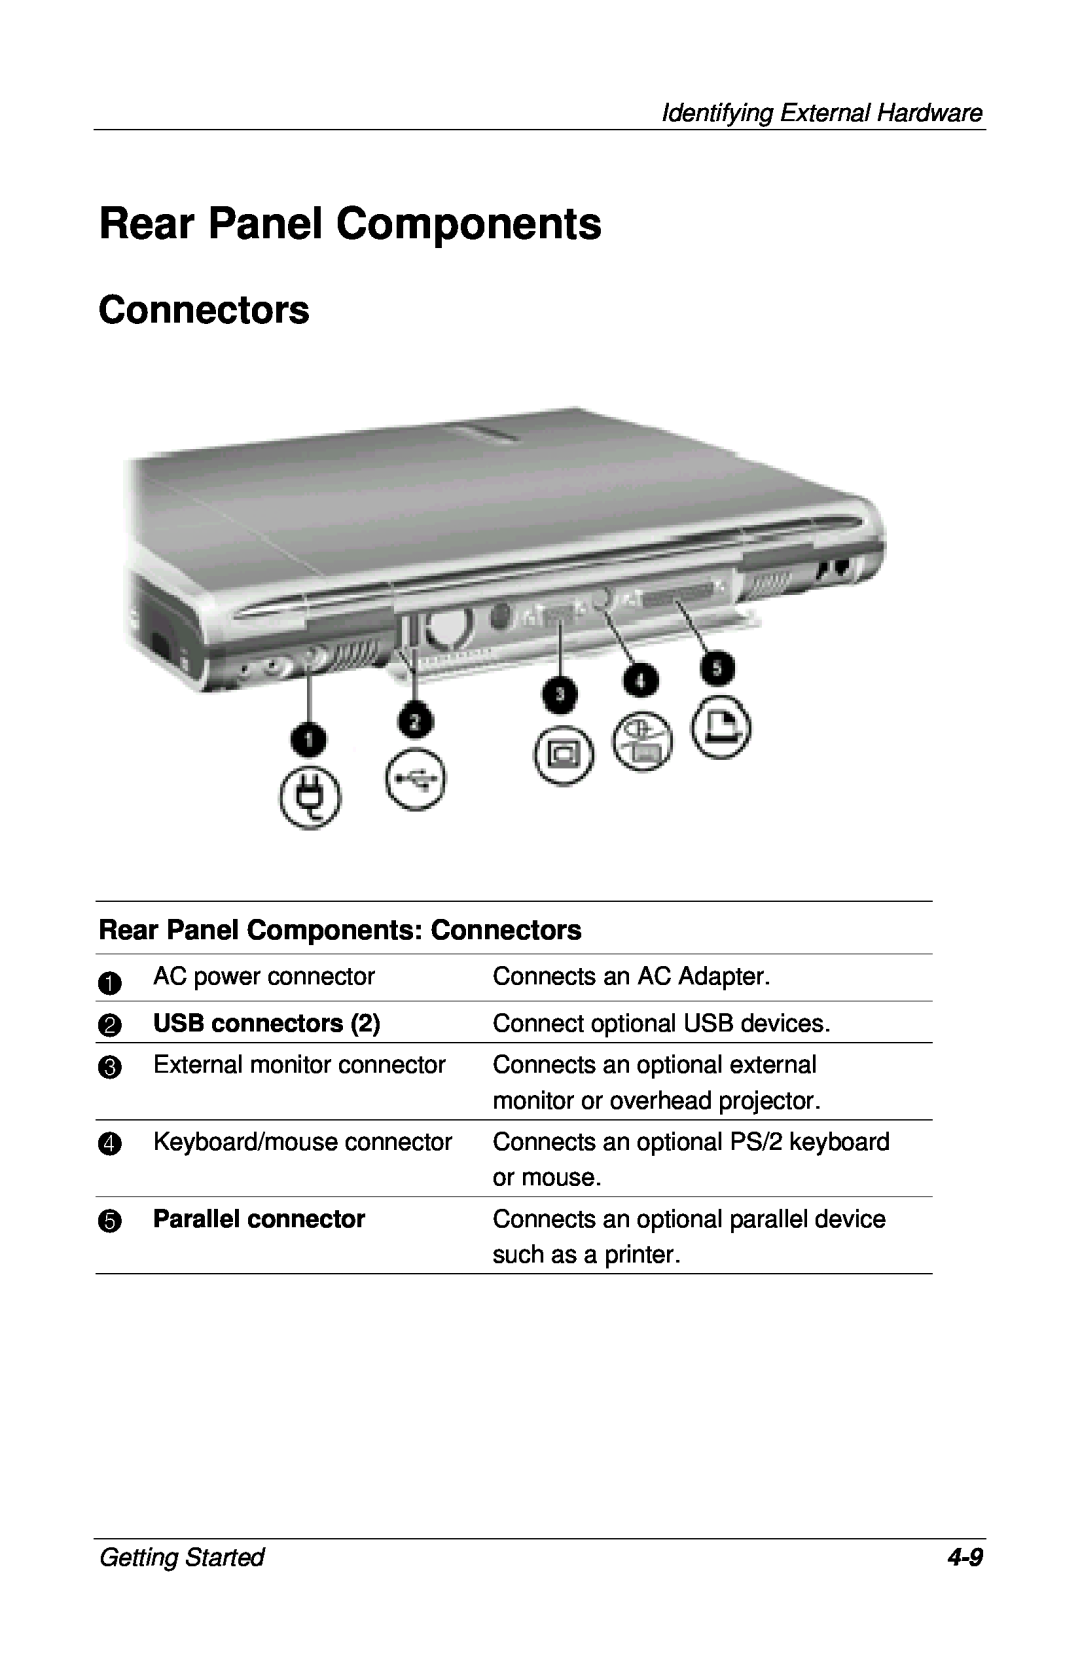 HP 916US, 955AP, 950AP, 943AP, 945AP, 940AP, 935AP Rear Panel Components Connectors, USB connectors, Parallel connector 